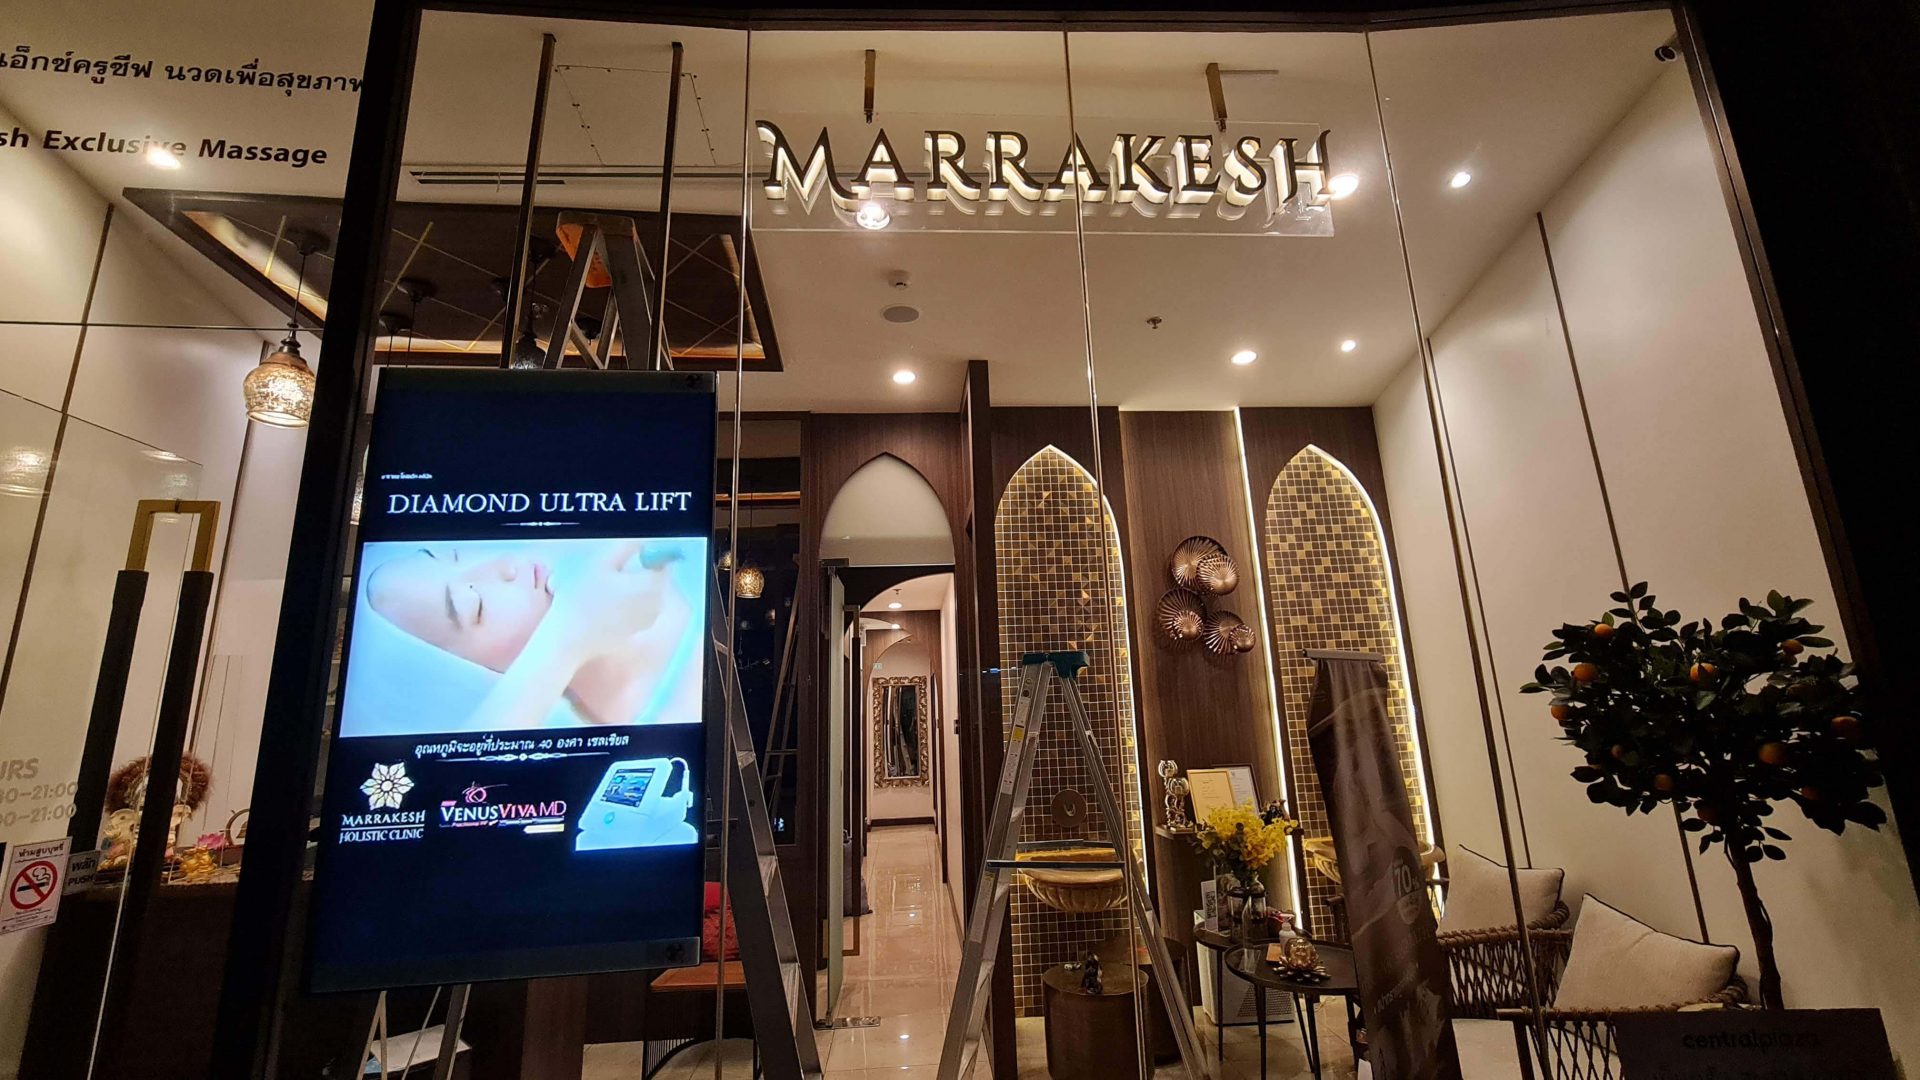 Marrakesh ร้านนวดเพื่อสุขภาพ Digital Signage (7)